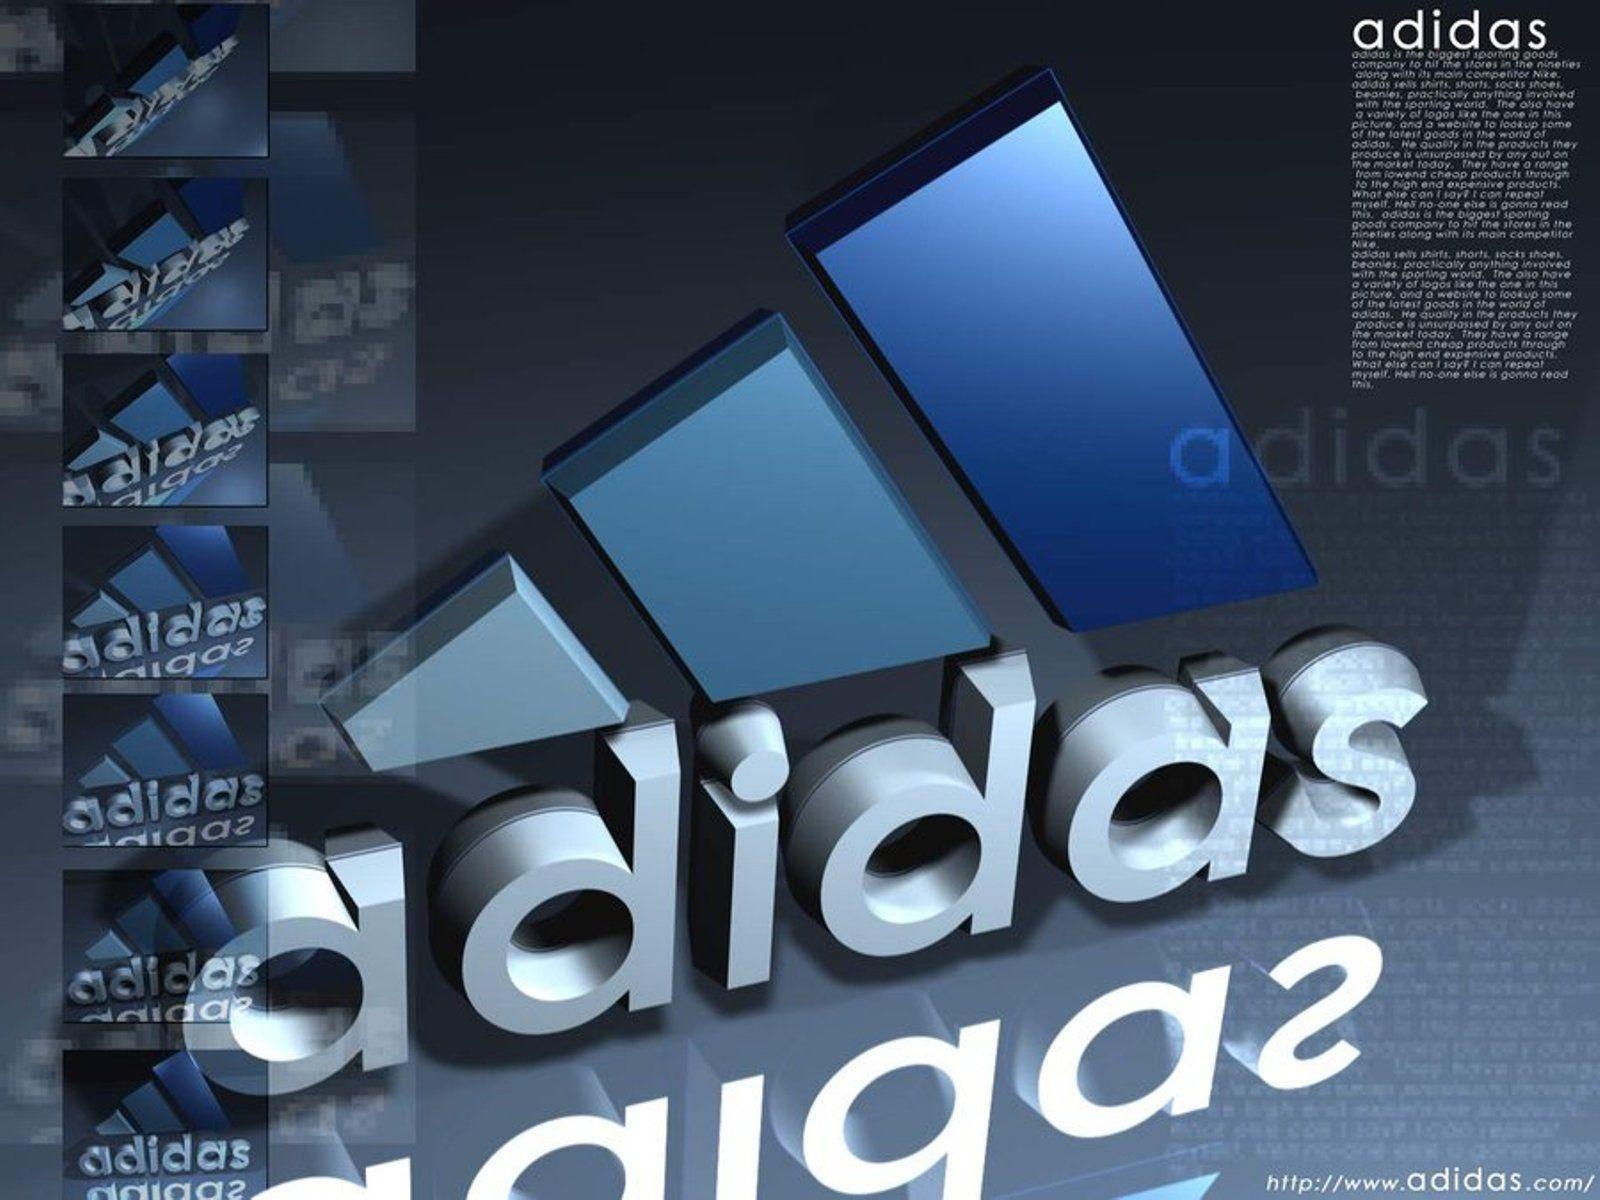 Adidas Logo 3D Desktop Wallpaper download adidas logo wallpaper